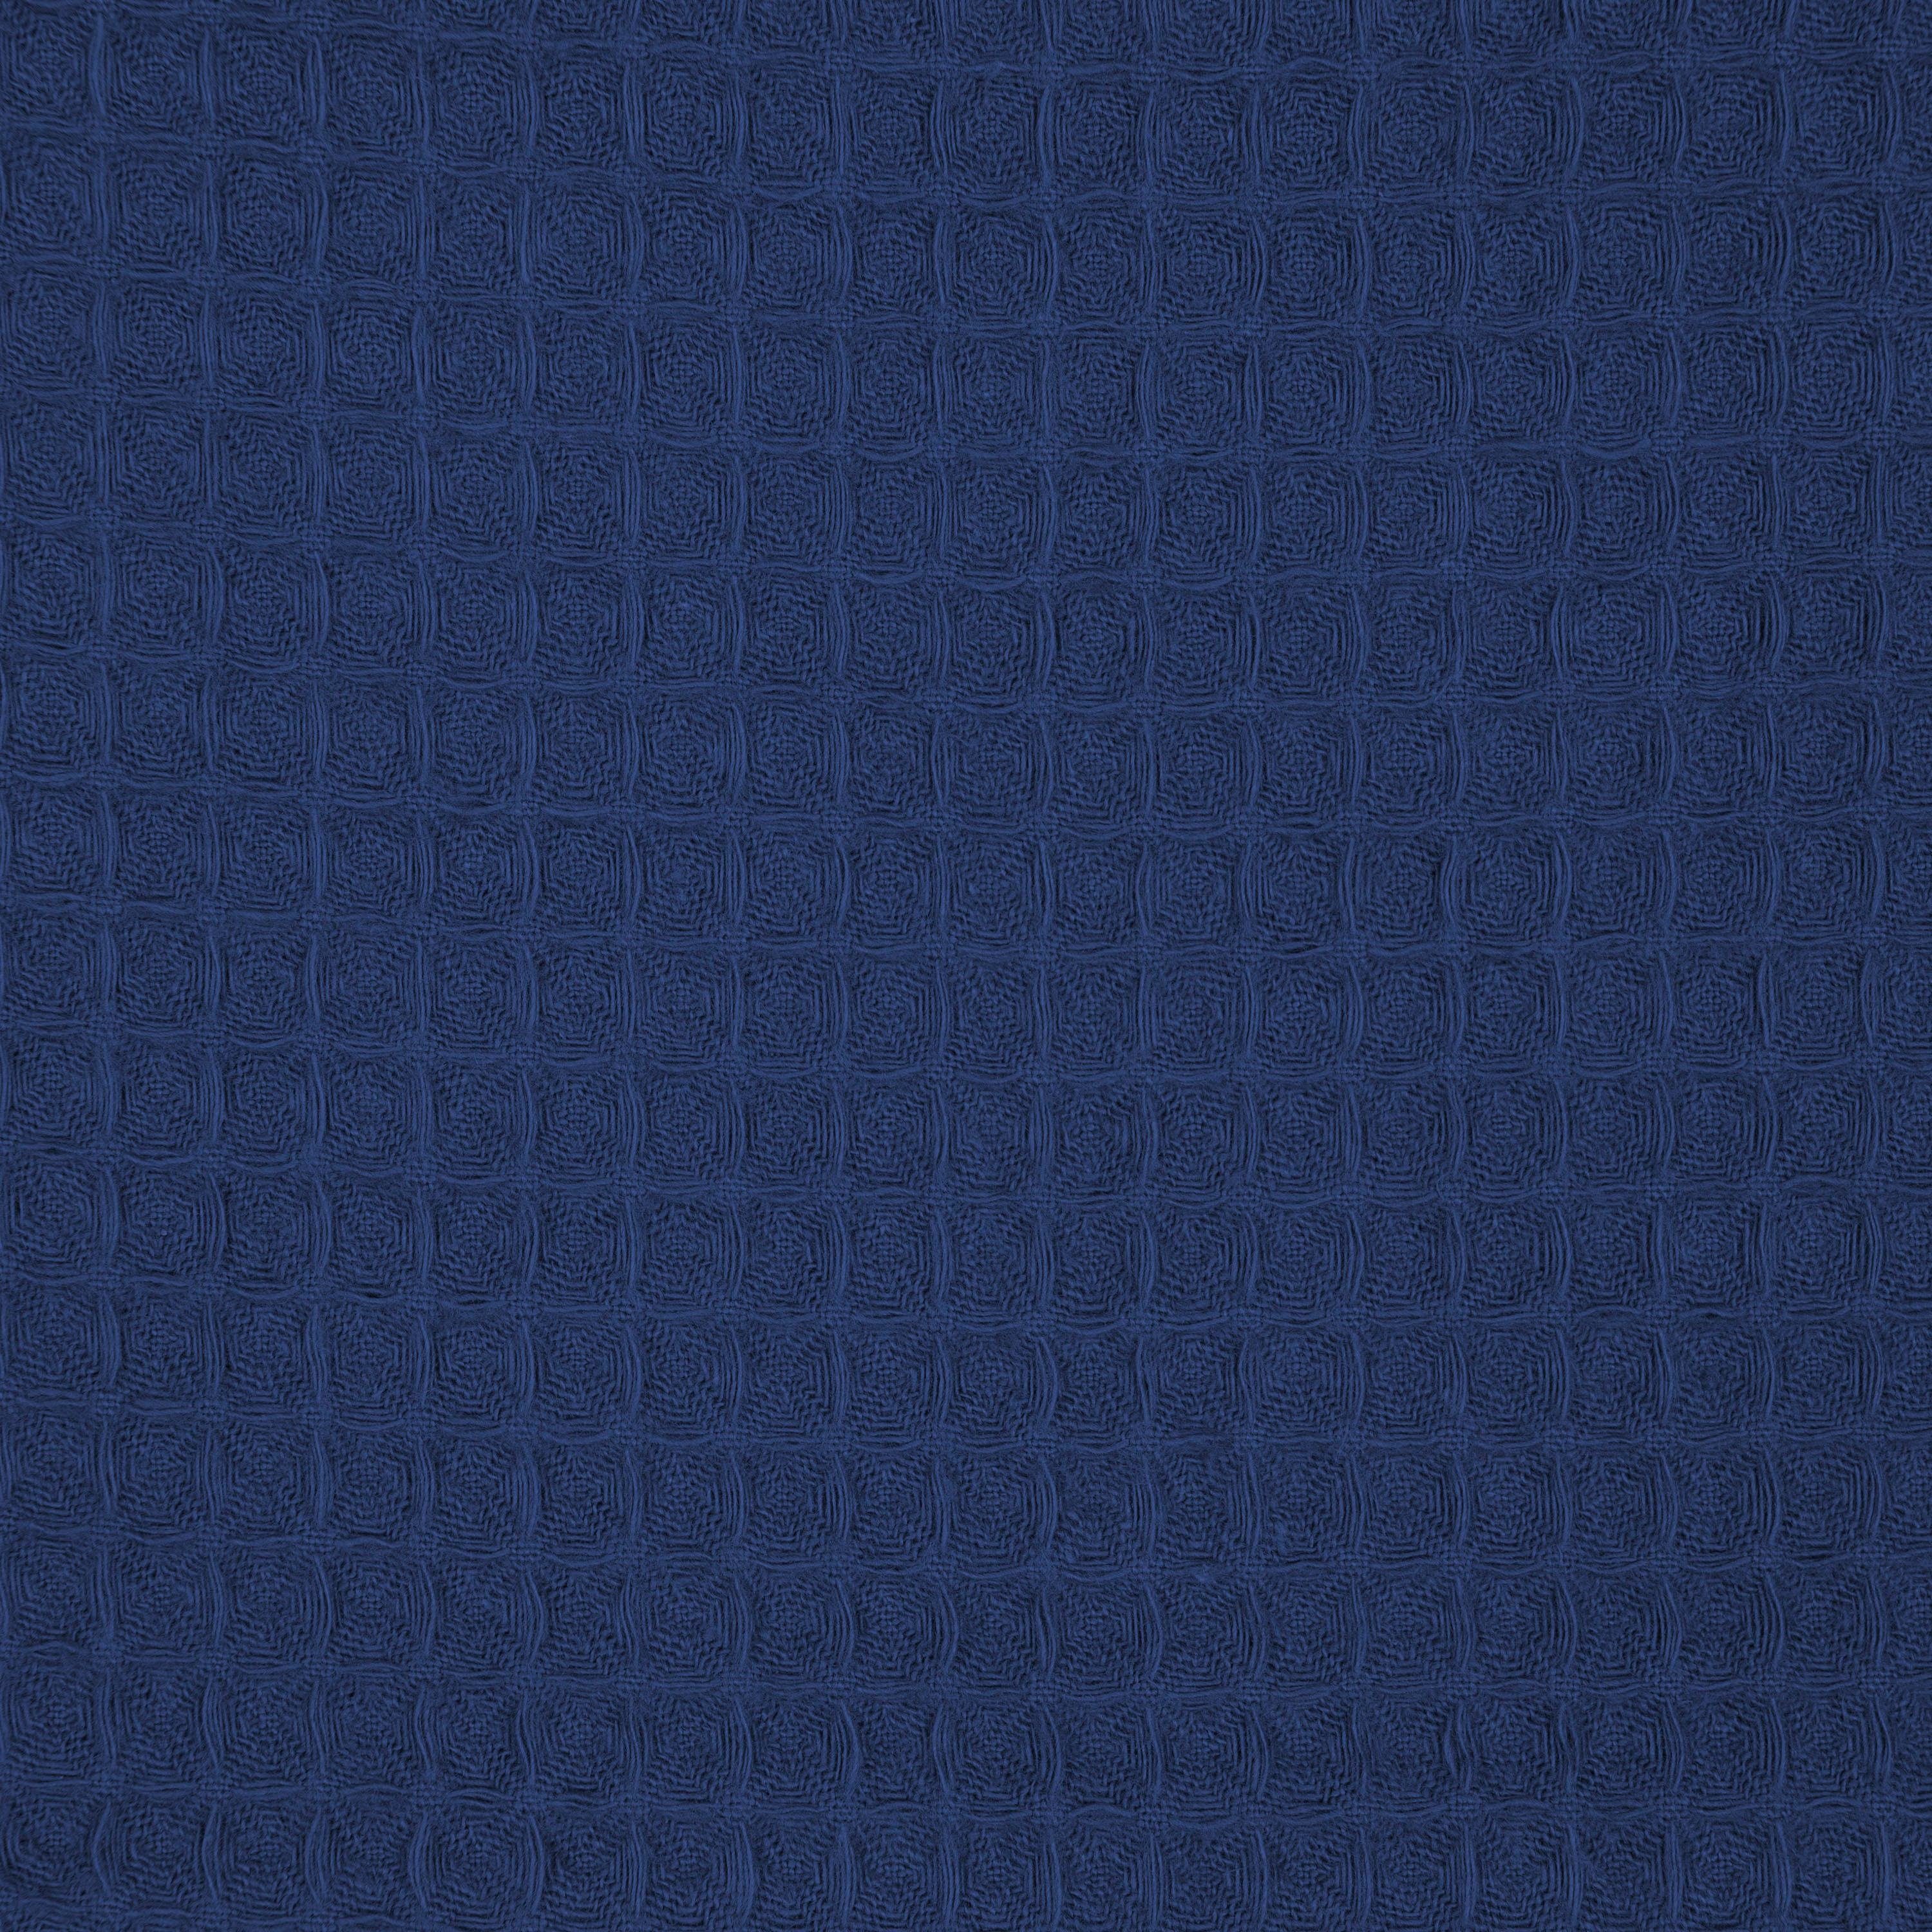 Langform, Gürtel, Baumwollbiese marineblau bugatti Piqué, Waffelpiqué-Struktur, mit Herrenbademantel Tizian, Kapuze,